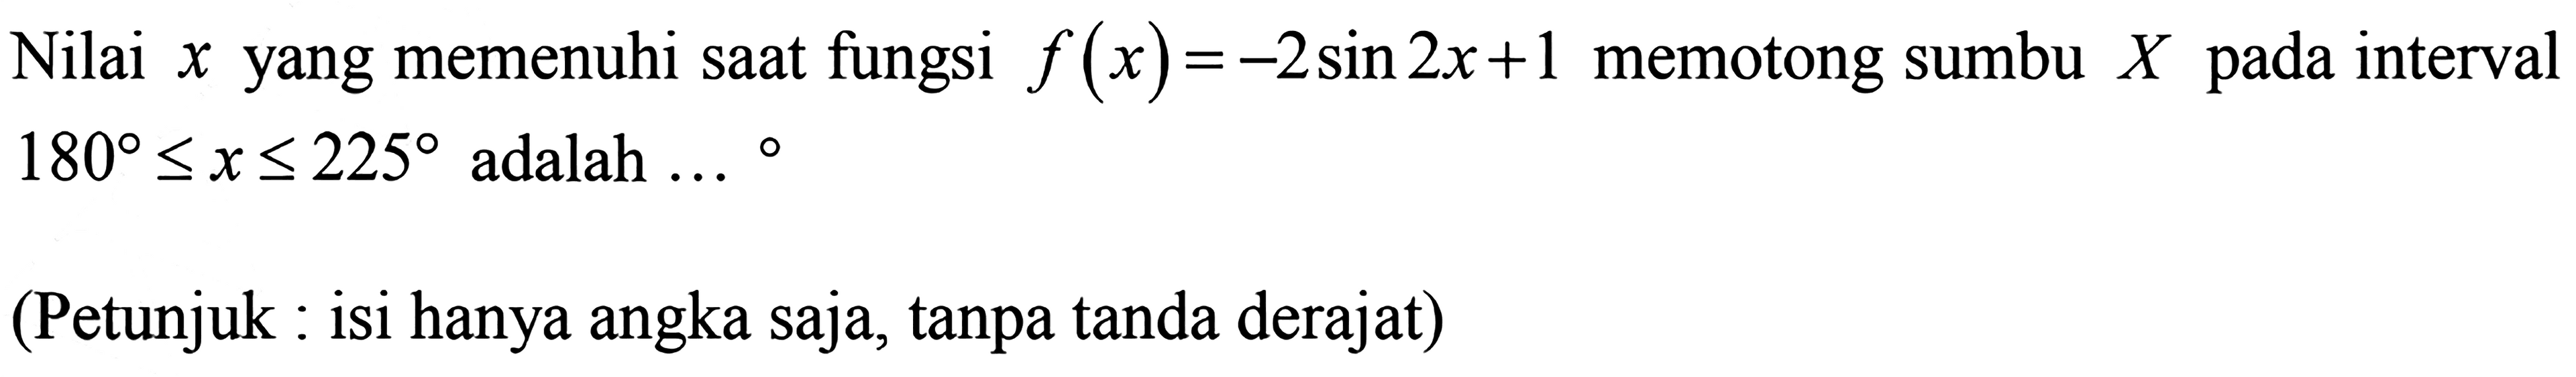 Nilai yang memenuhi saat fungsi f(x)= -2sin2x+1 memotong sumbu X pada interval 180<=x <= 225 adalah (Petunjuk : isi hanya angka saja, tanpa tanda derajat)